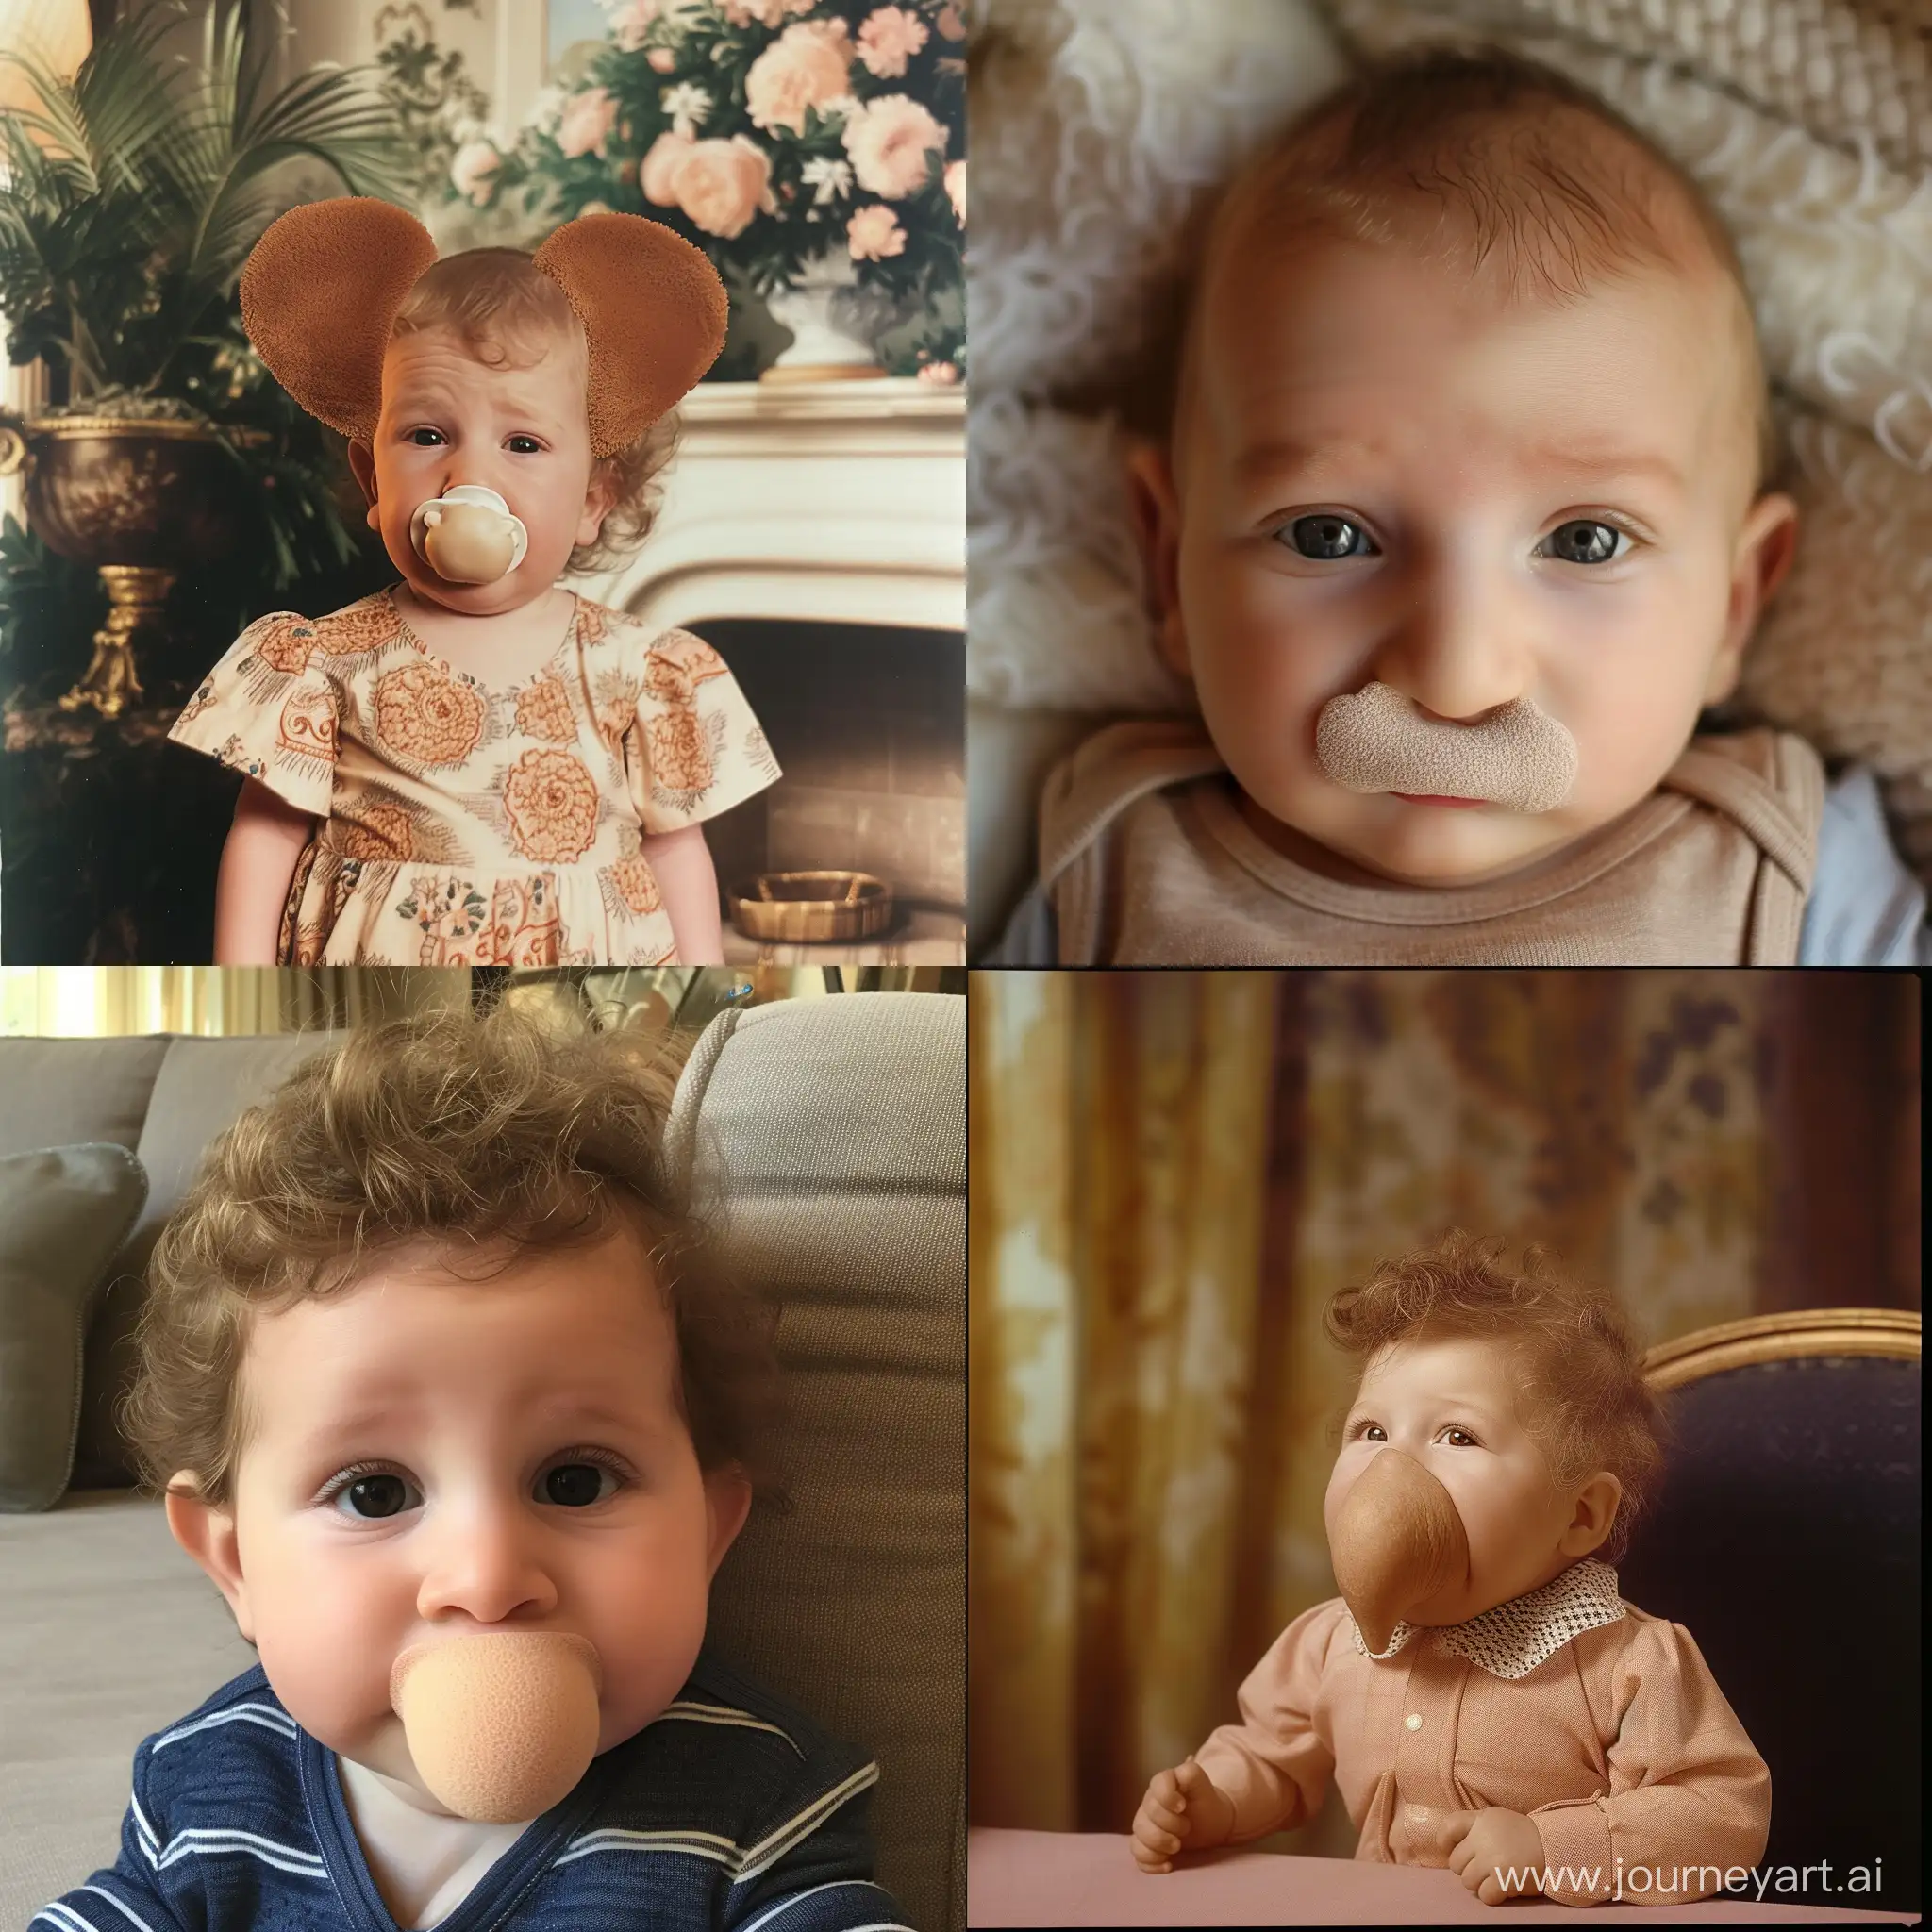 Barbra-Streisand-Baby-with-Oversized-Nose-Portrait